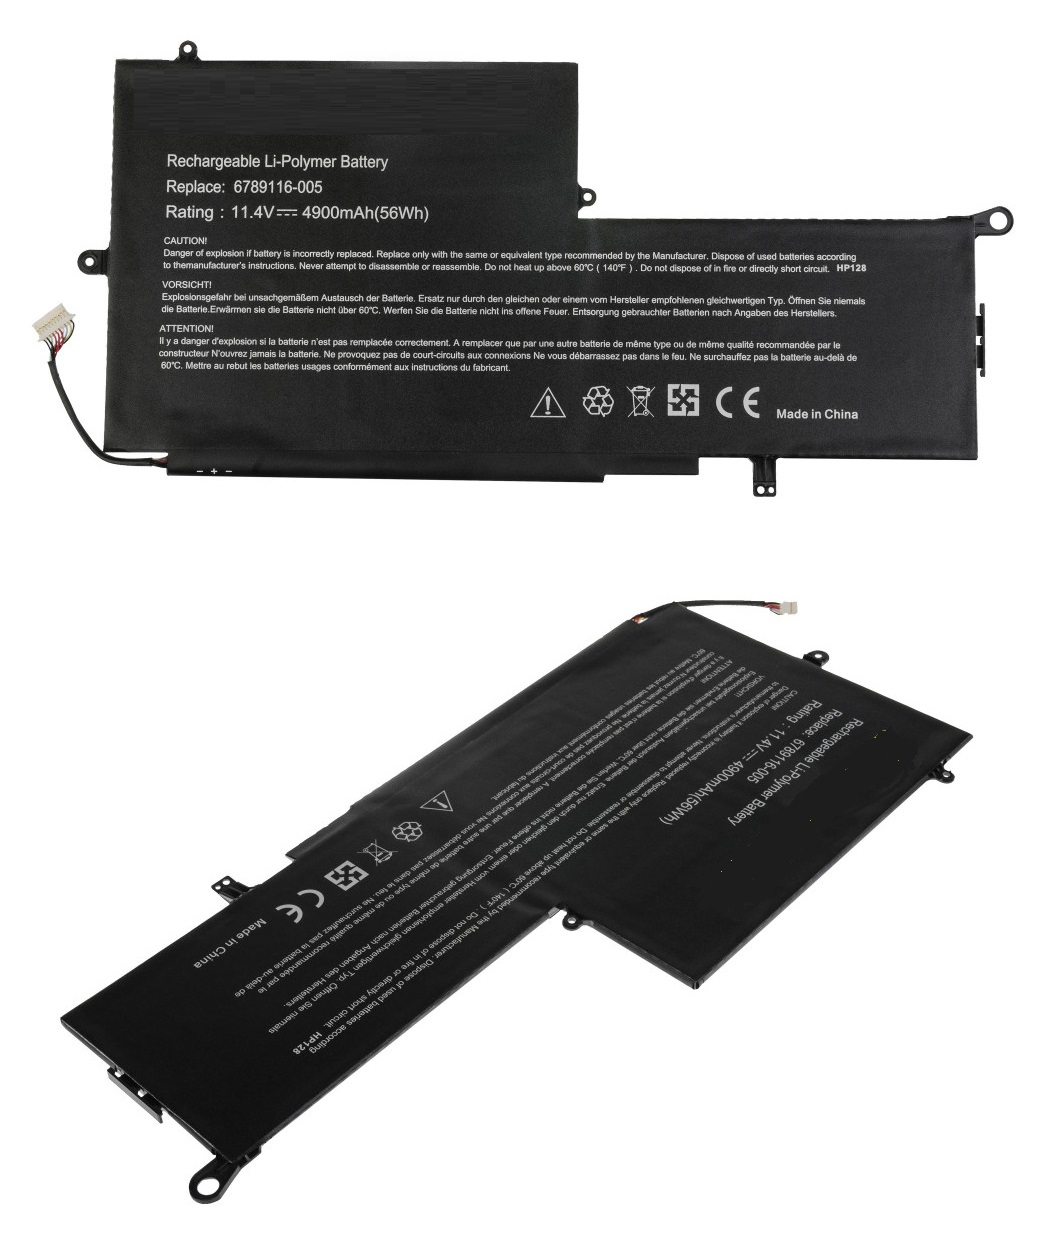 HP Spectre x360 13-000np L2W19ea Laptop Battery